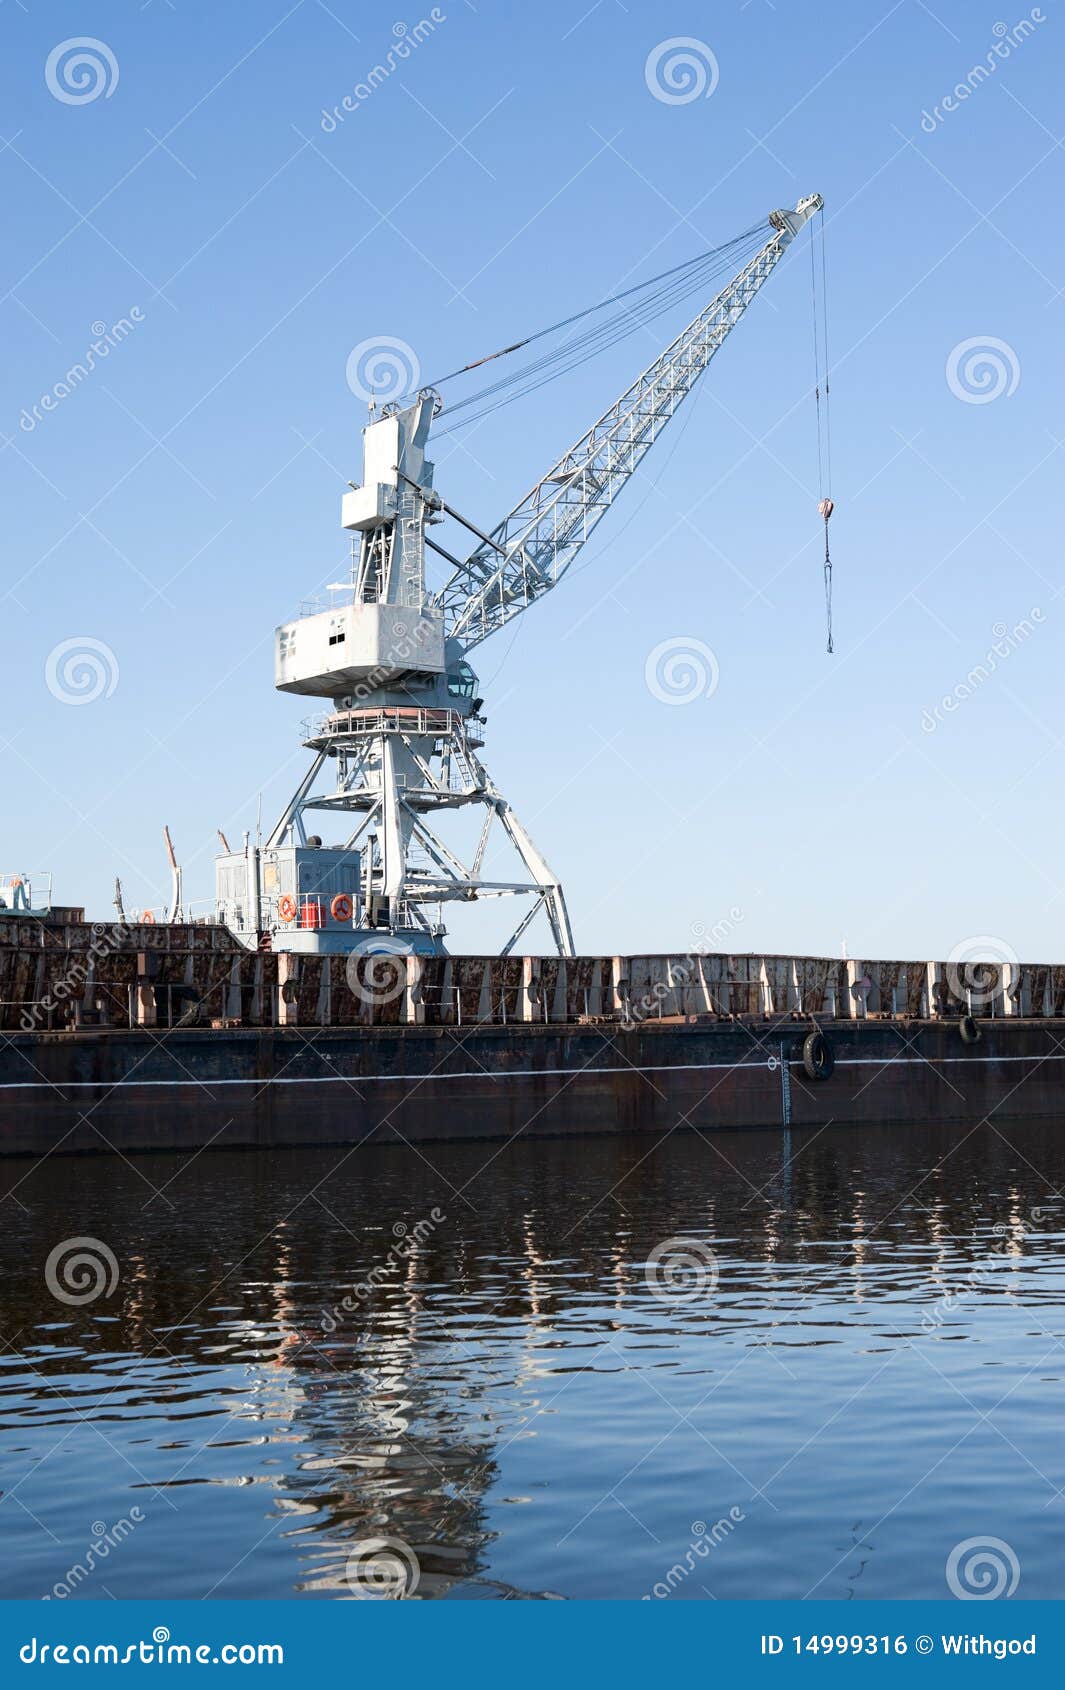 wharf with hoisting crane